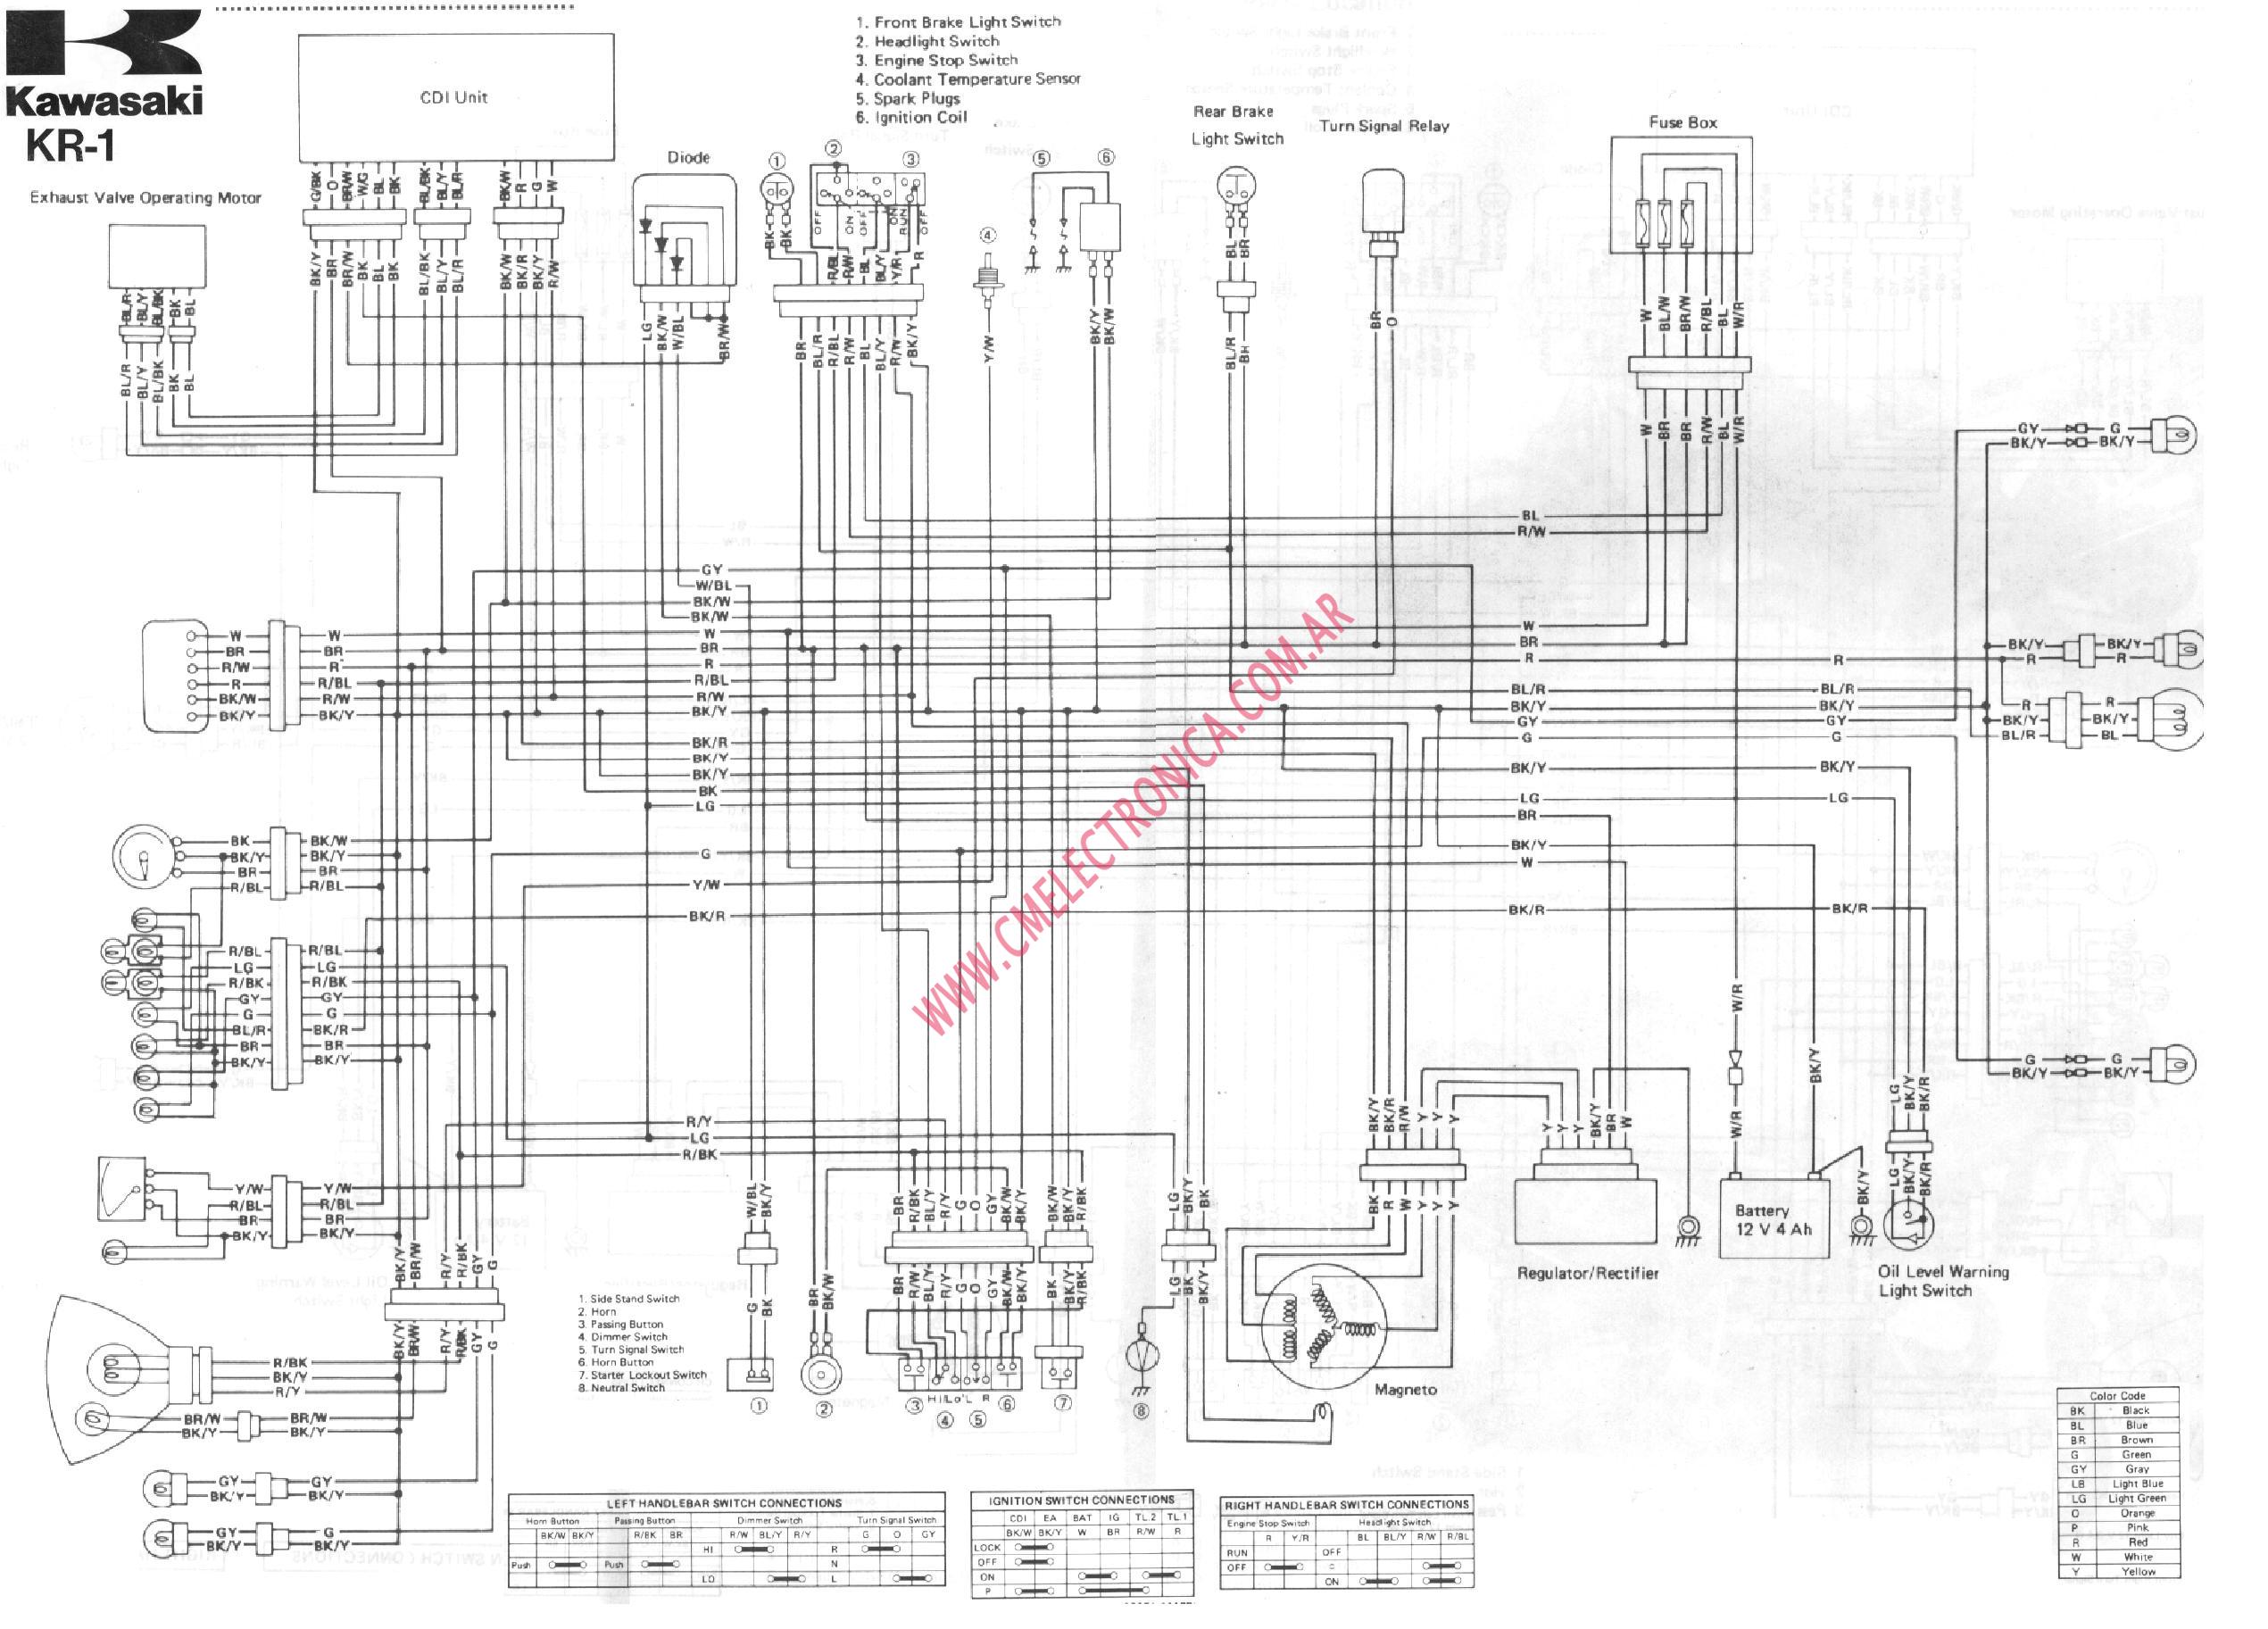 [DIAGRAM] 1983 Kawasaki Klt 200 Wiring Diagram FULL Version HD Quality